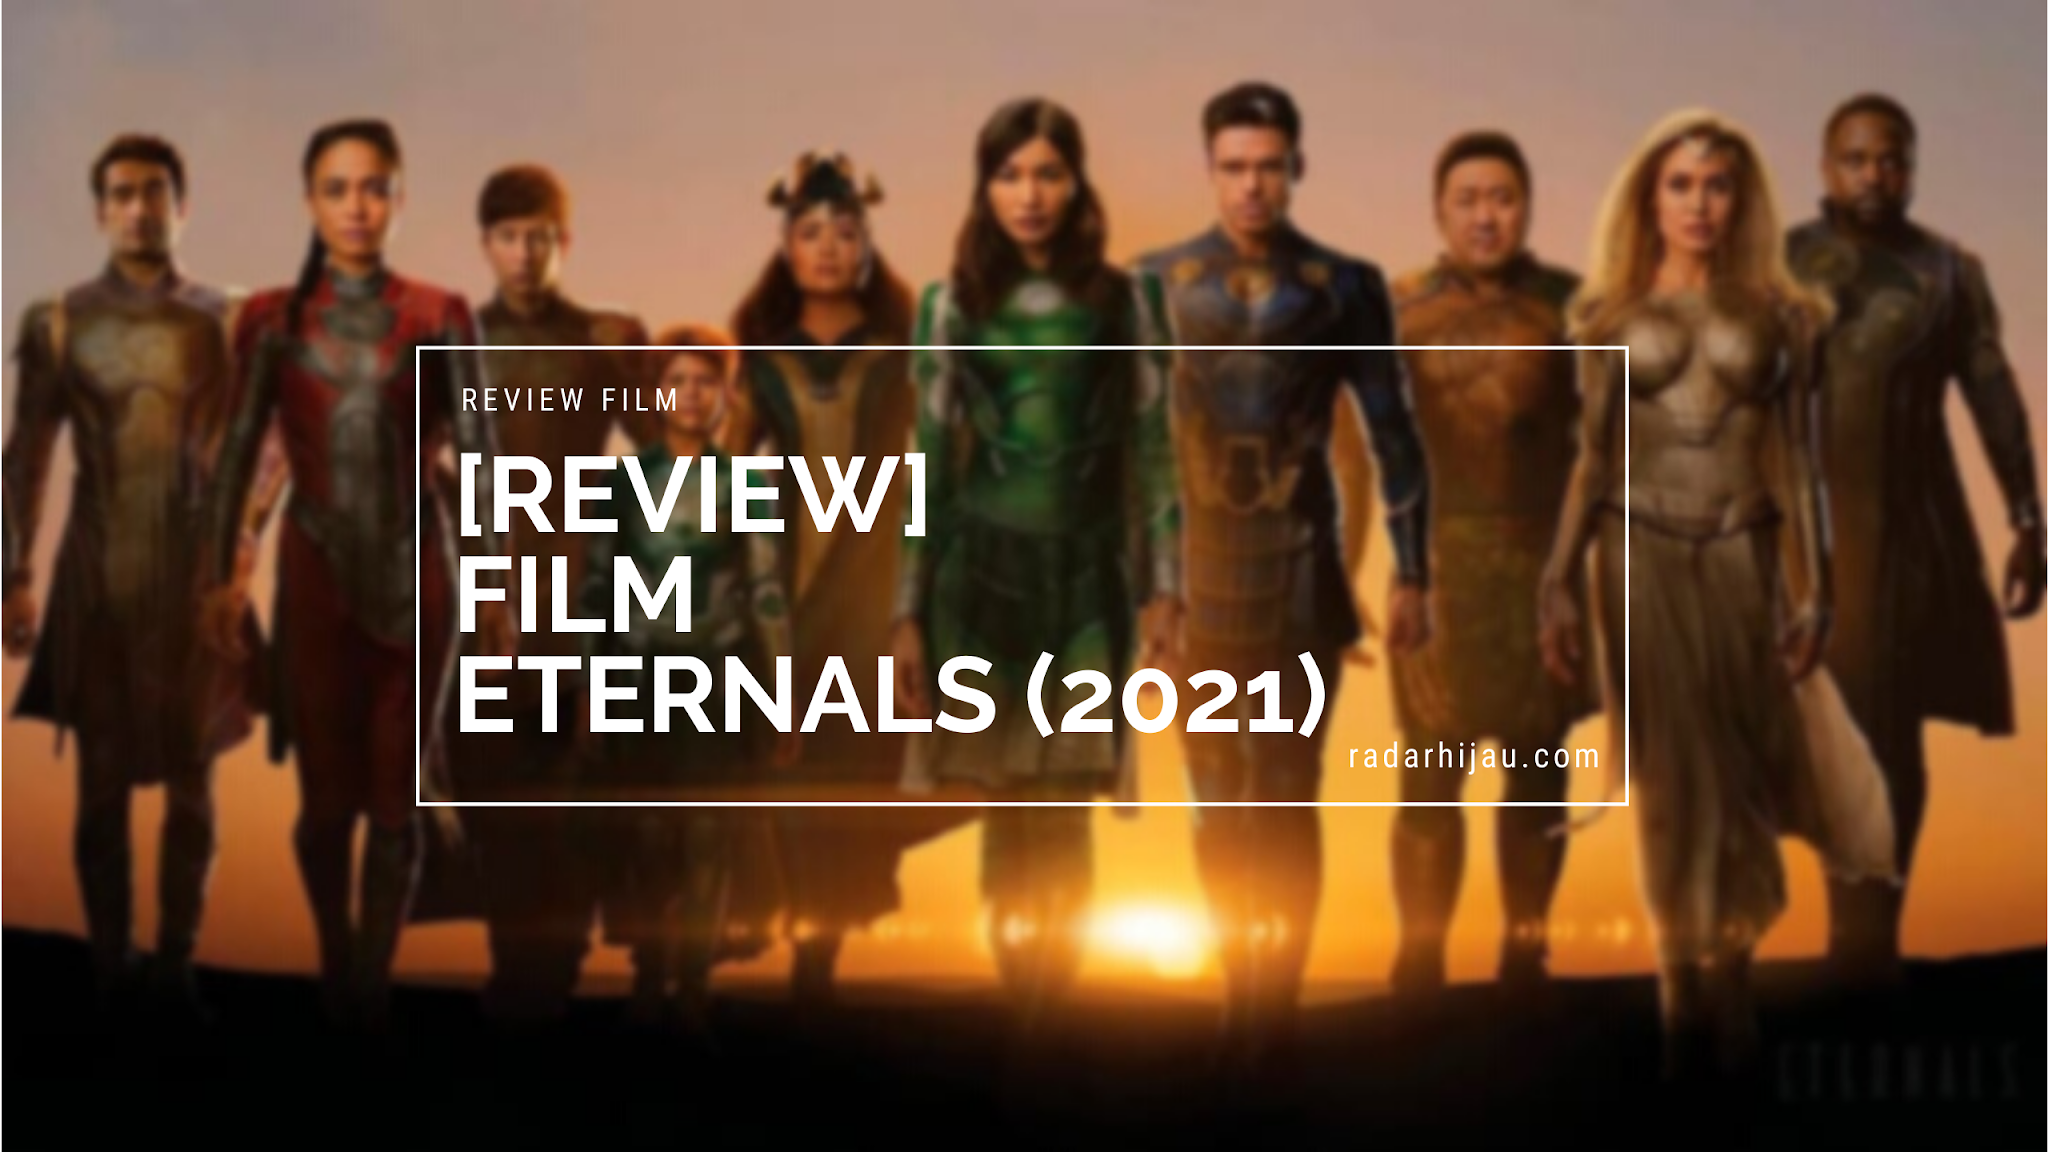 Review Film Eternals 2021